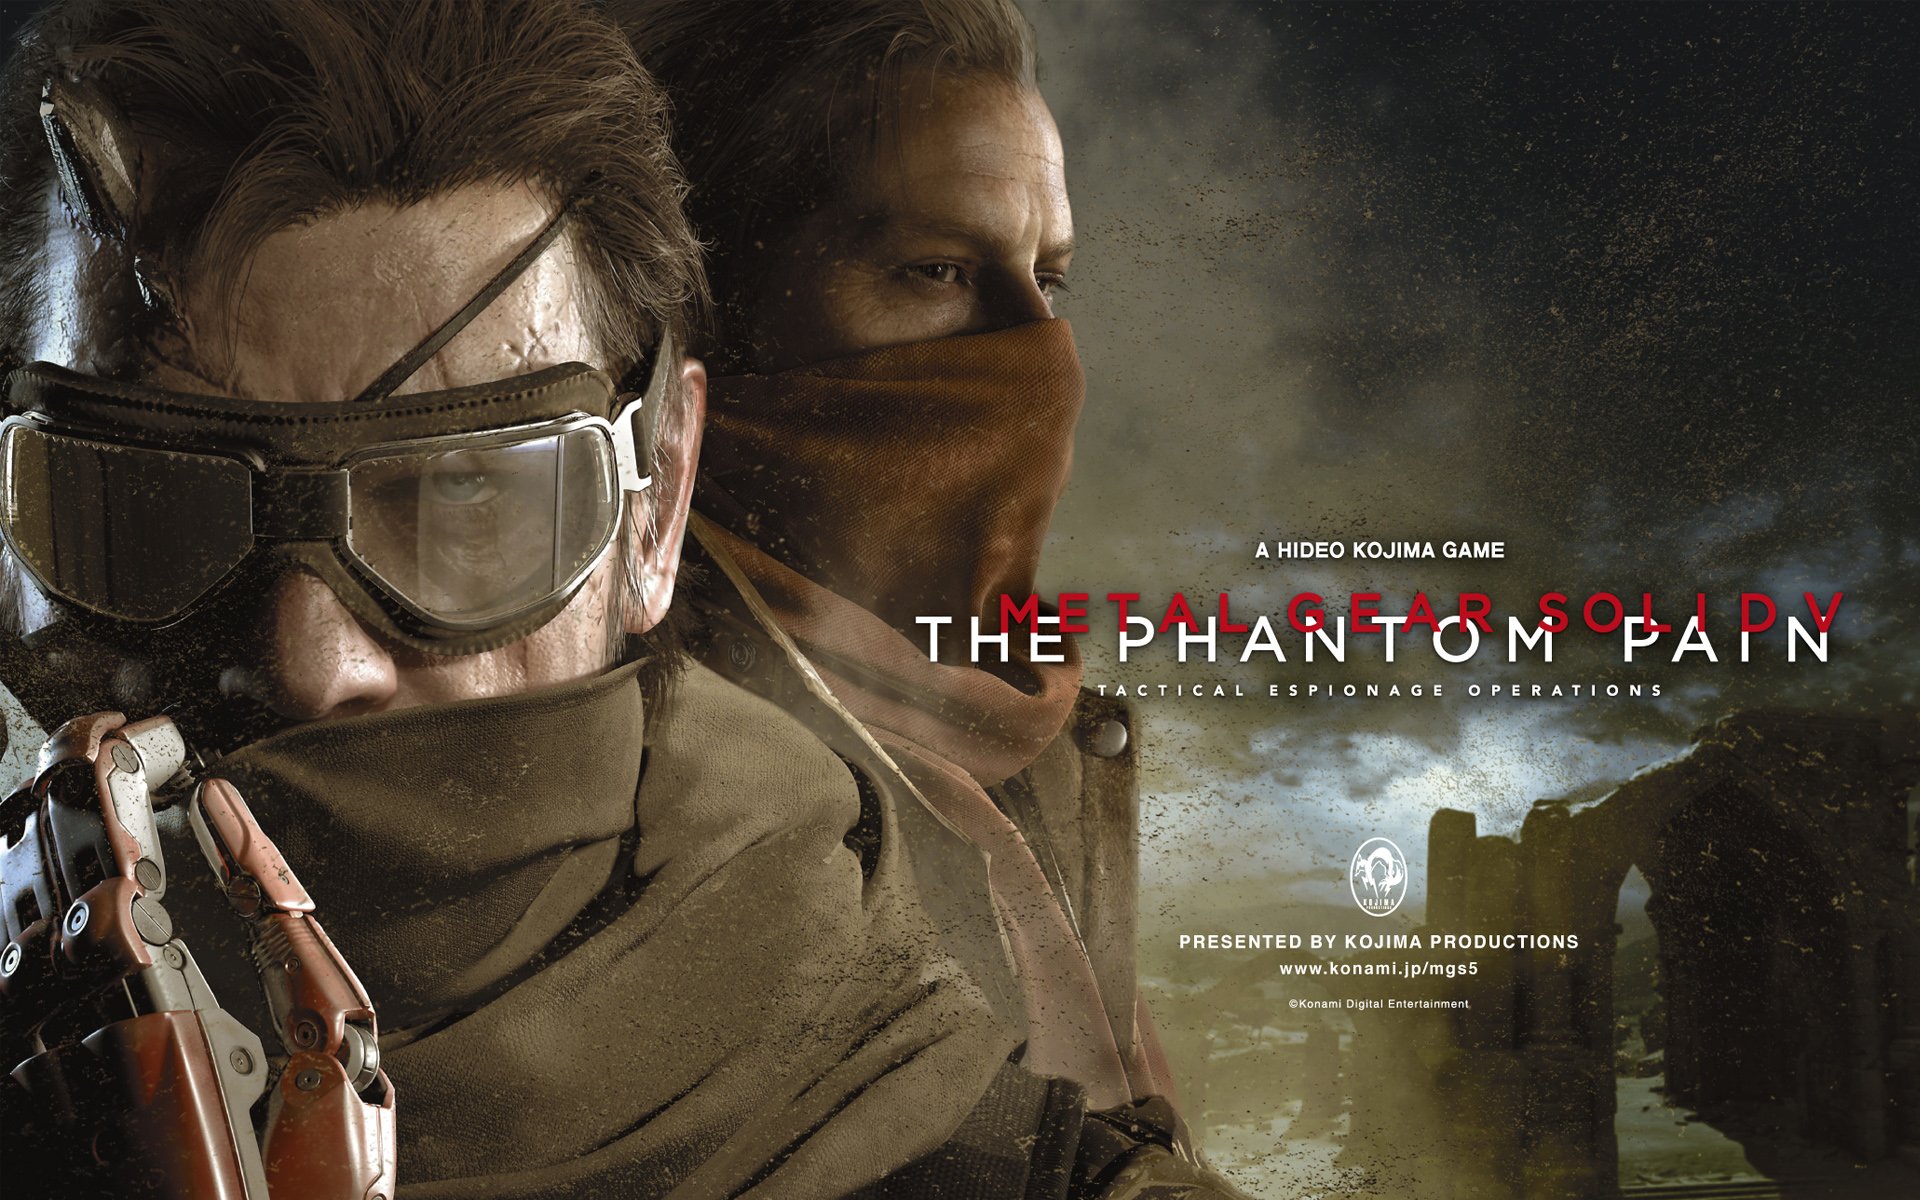 Metal Gear Solid V The Phantom Pain HD Wallpaper Background